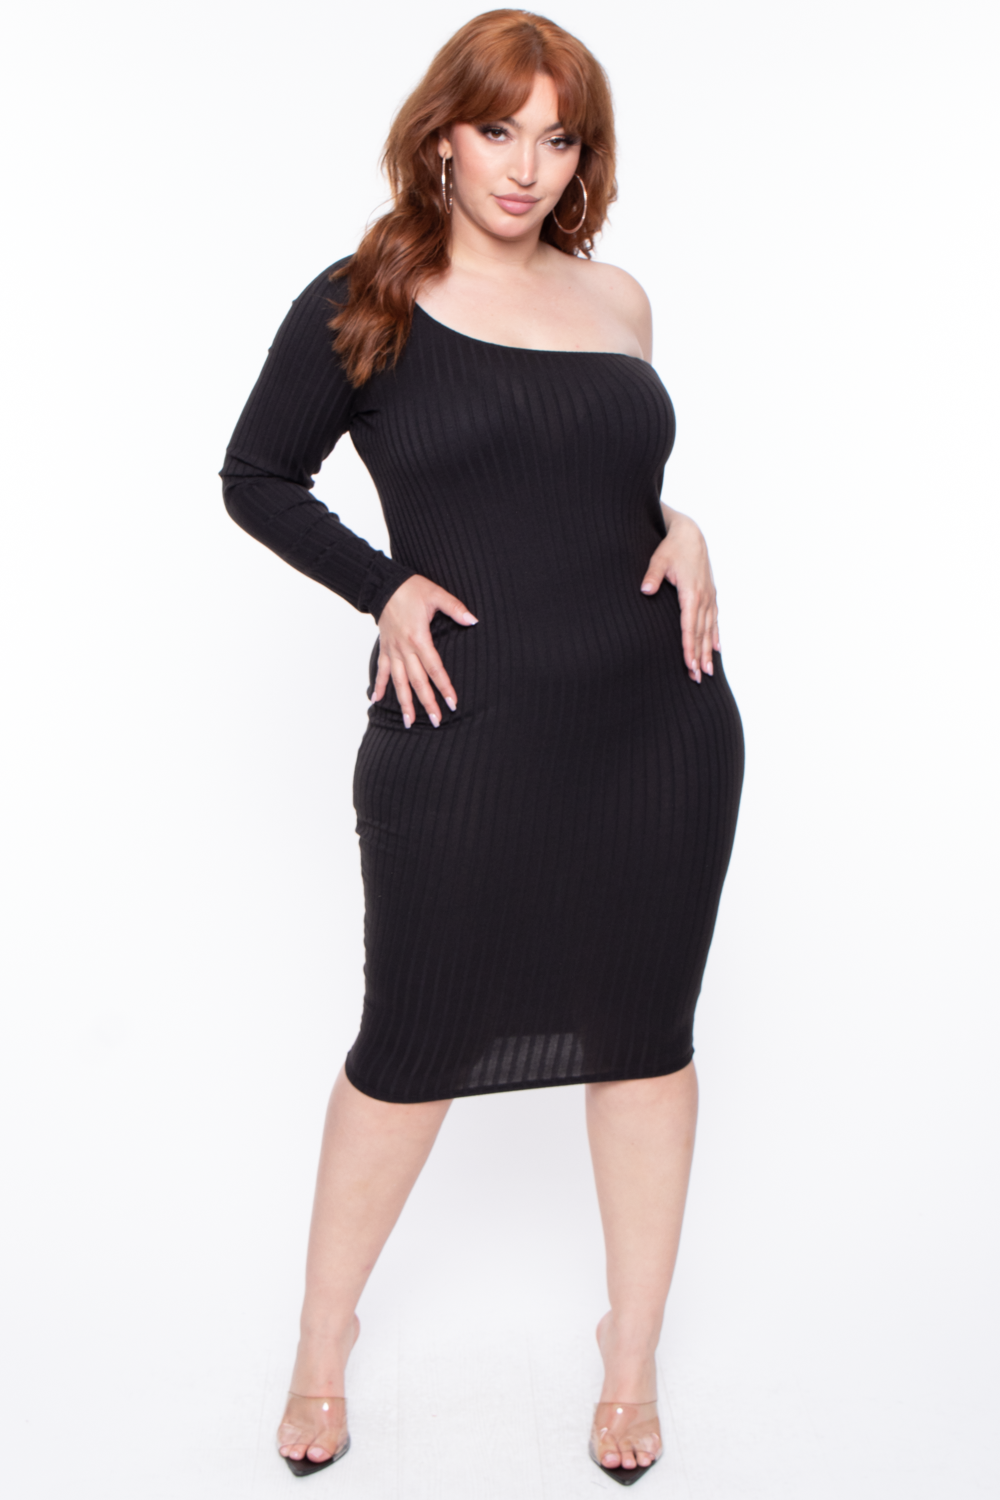 Curvy Sense Dresses 1X / Black Plus Size Asymmetric Ribbed Dress - Black